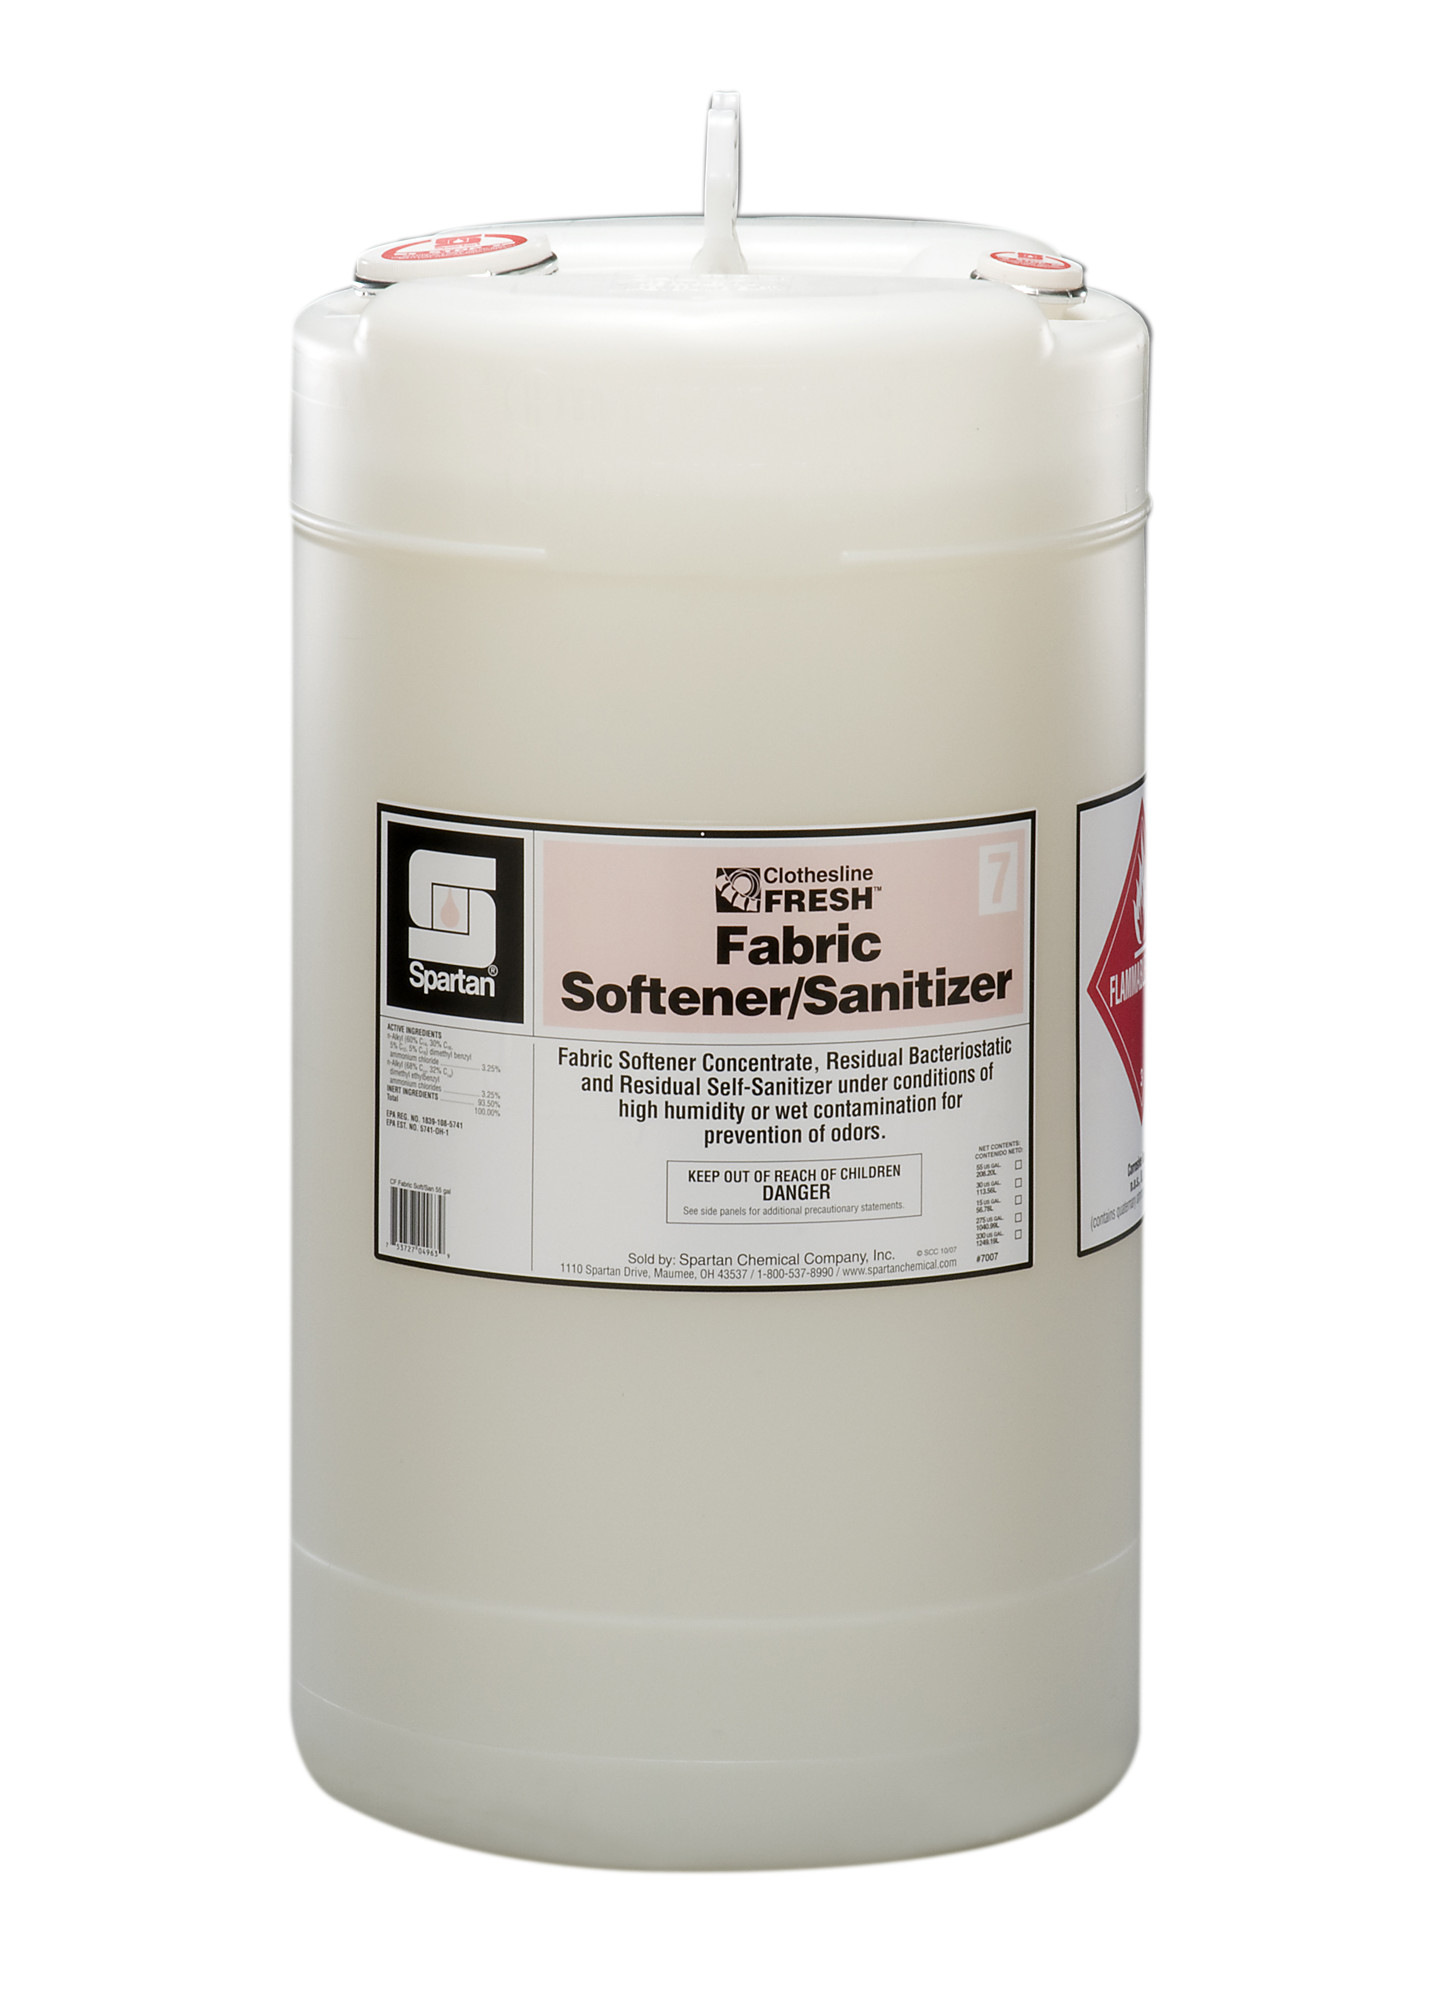 Spartan Chemical Company Clothesline Fresh Fabric Softener/Sanitizer 7, 15 GAL DRUM